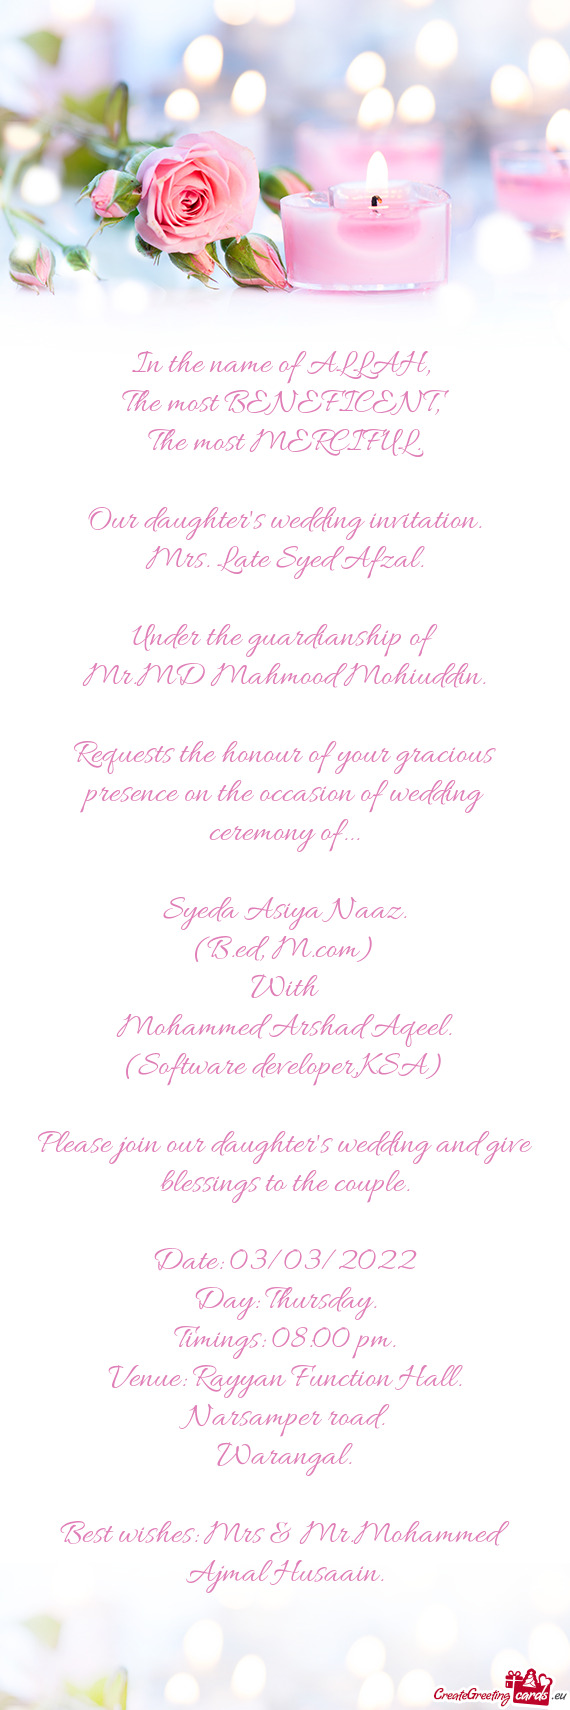 Mr.MD Mahmood Mohiuddin